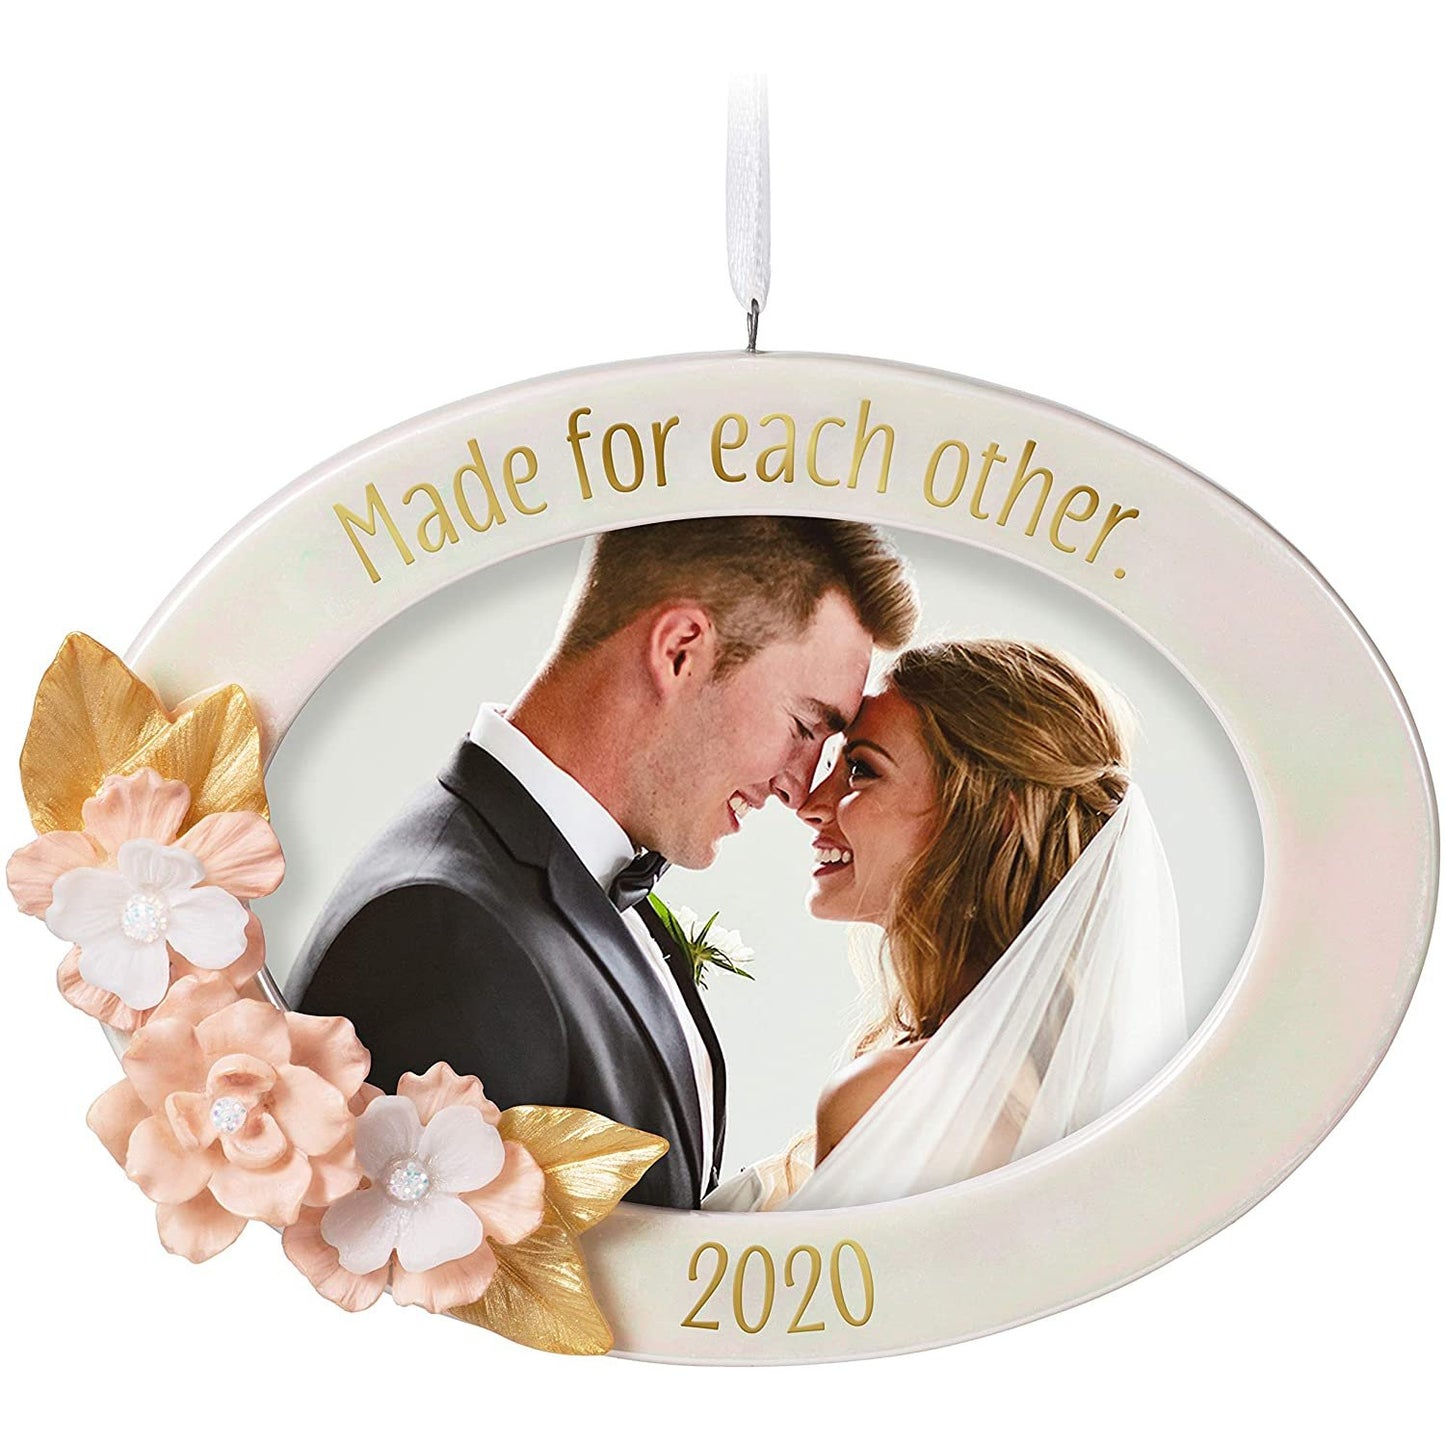 Hallmark Keepsake Ornament 2020 Year Dated Made for Eachother Wedding Photo Frame